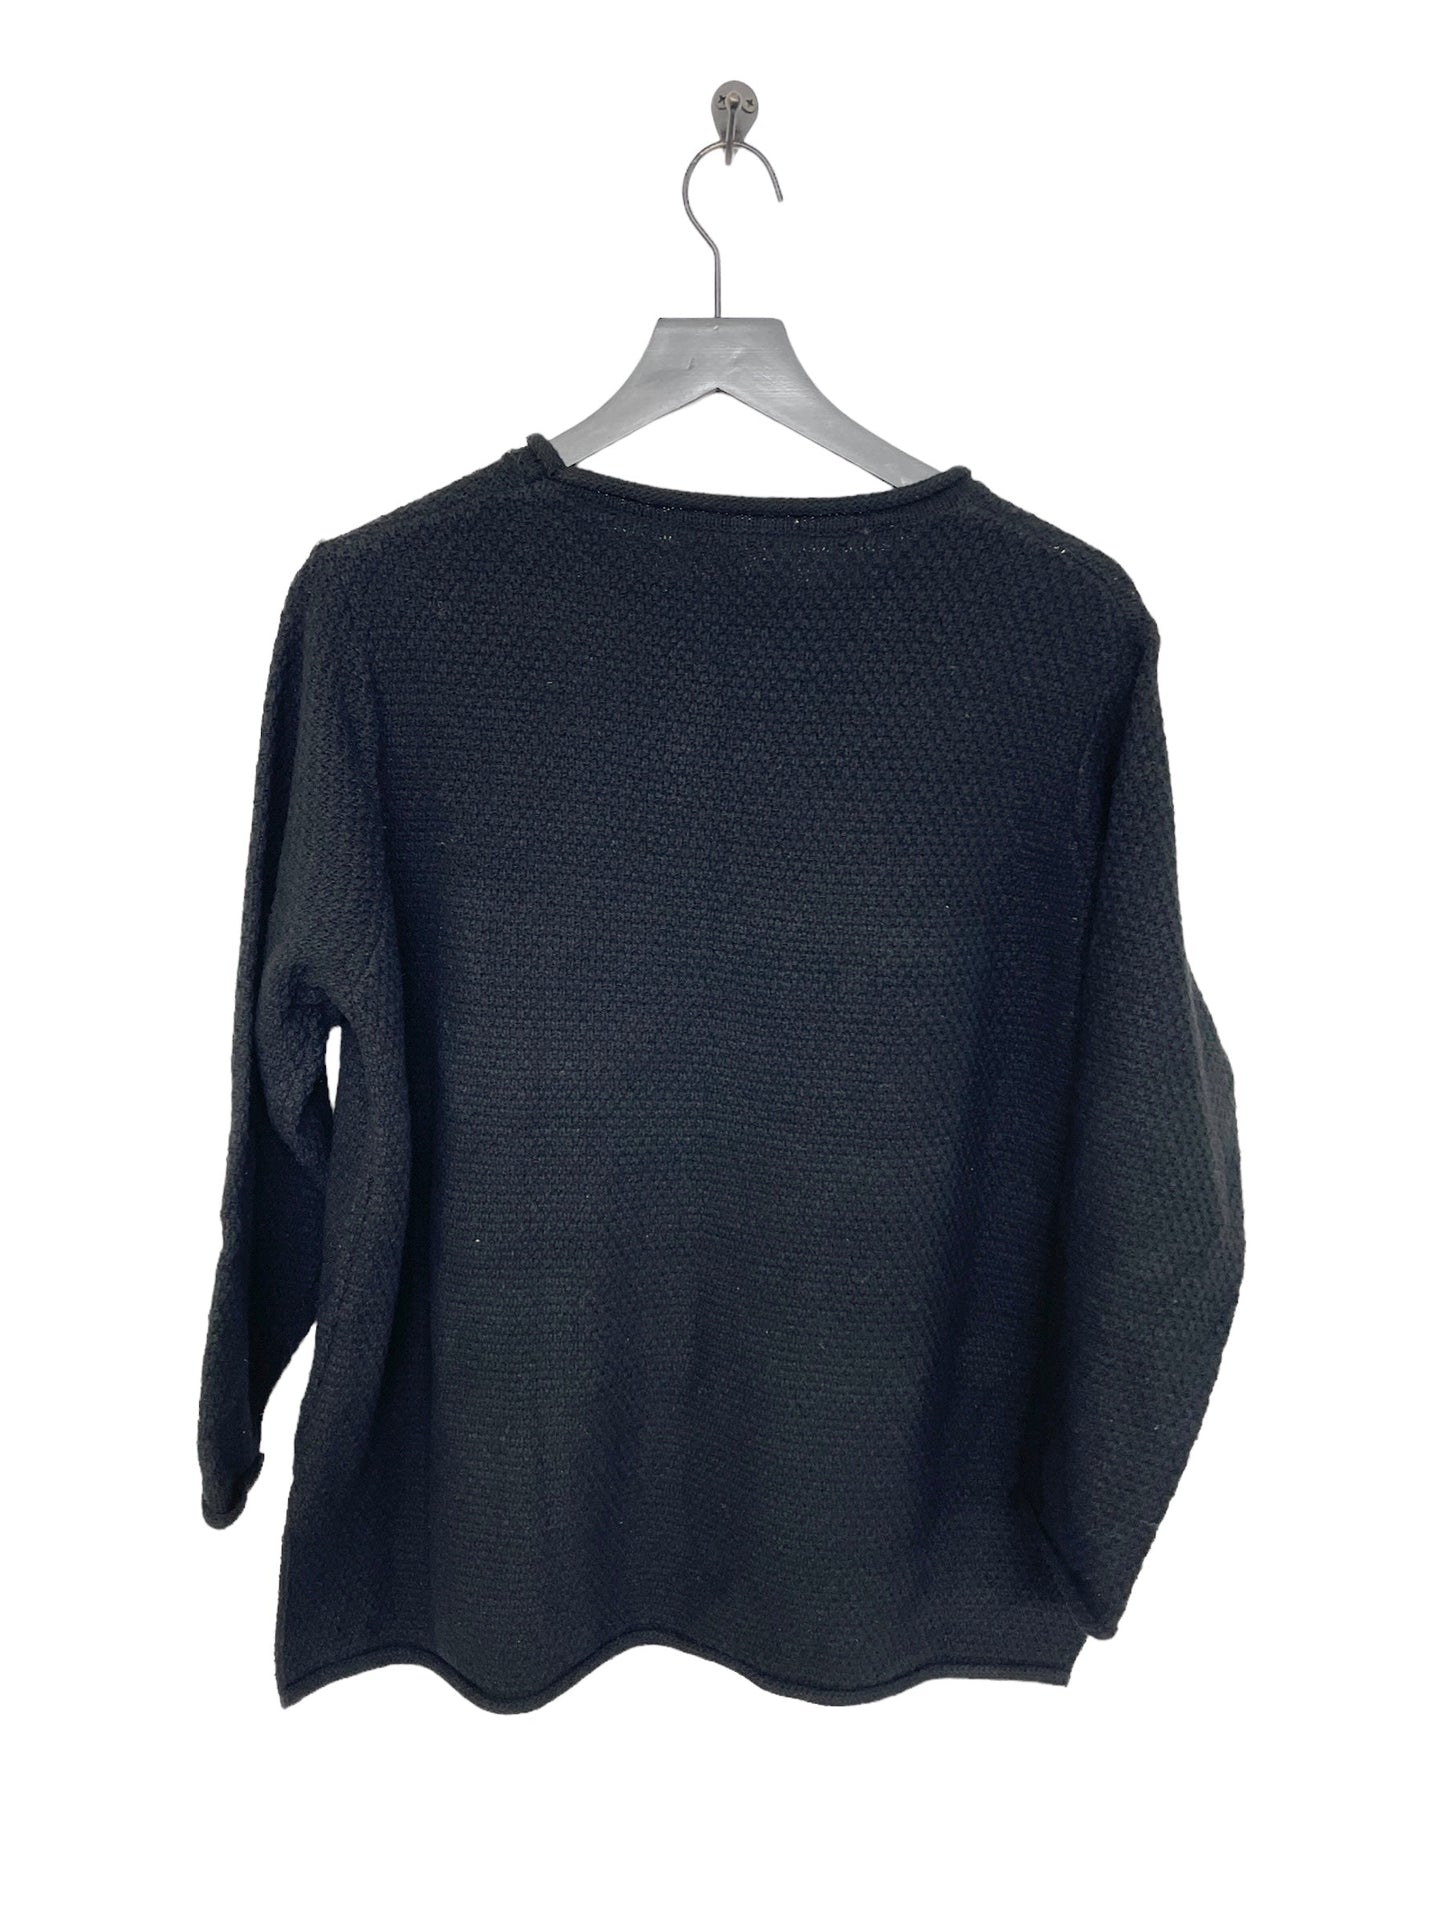 Black Sweater Lovestitch, Size M